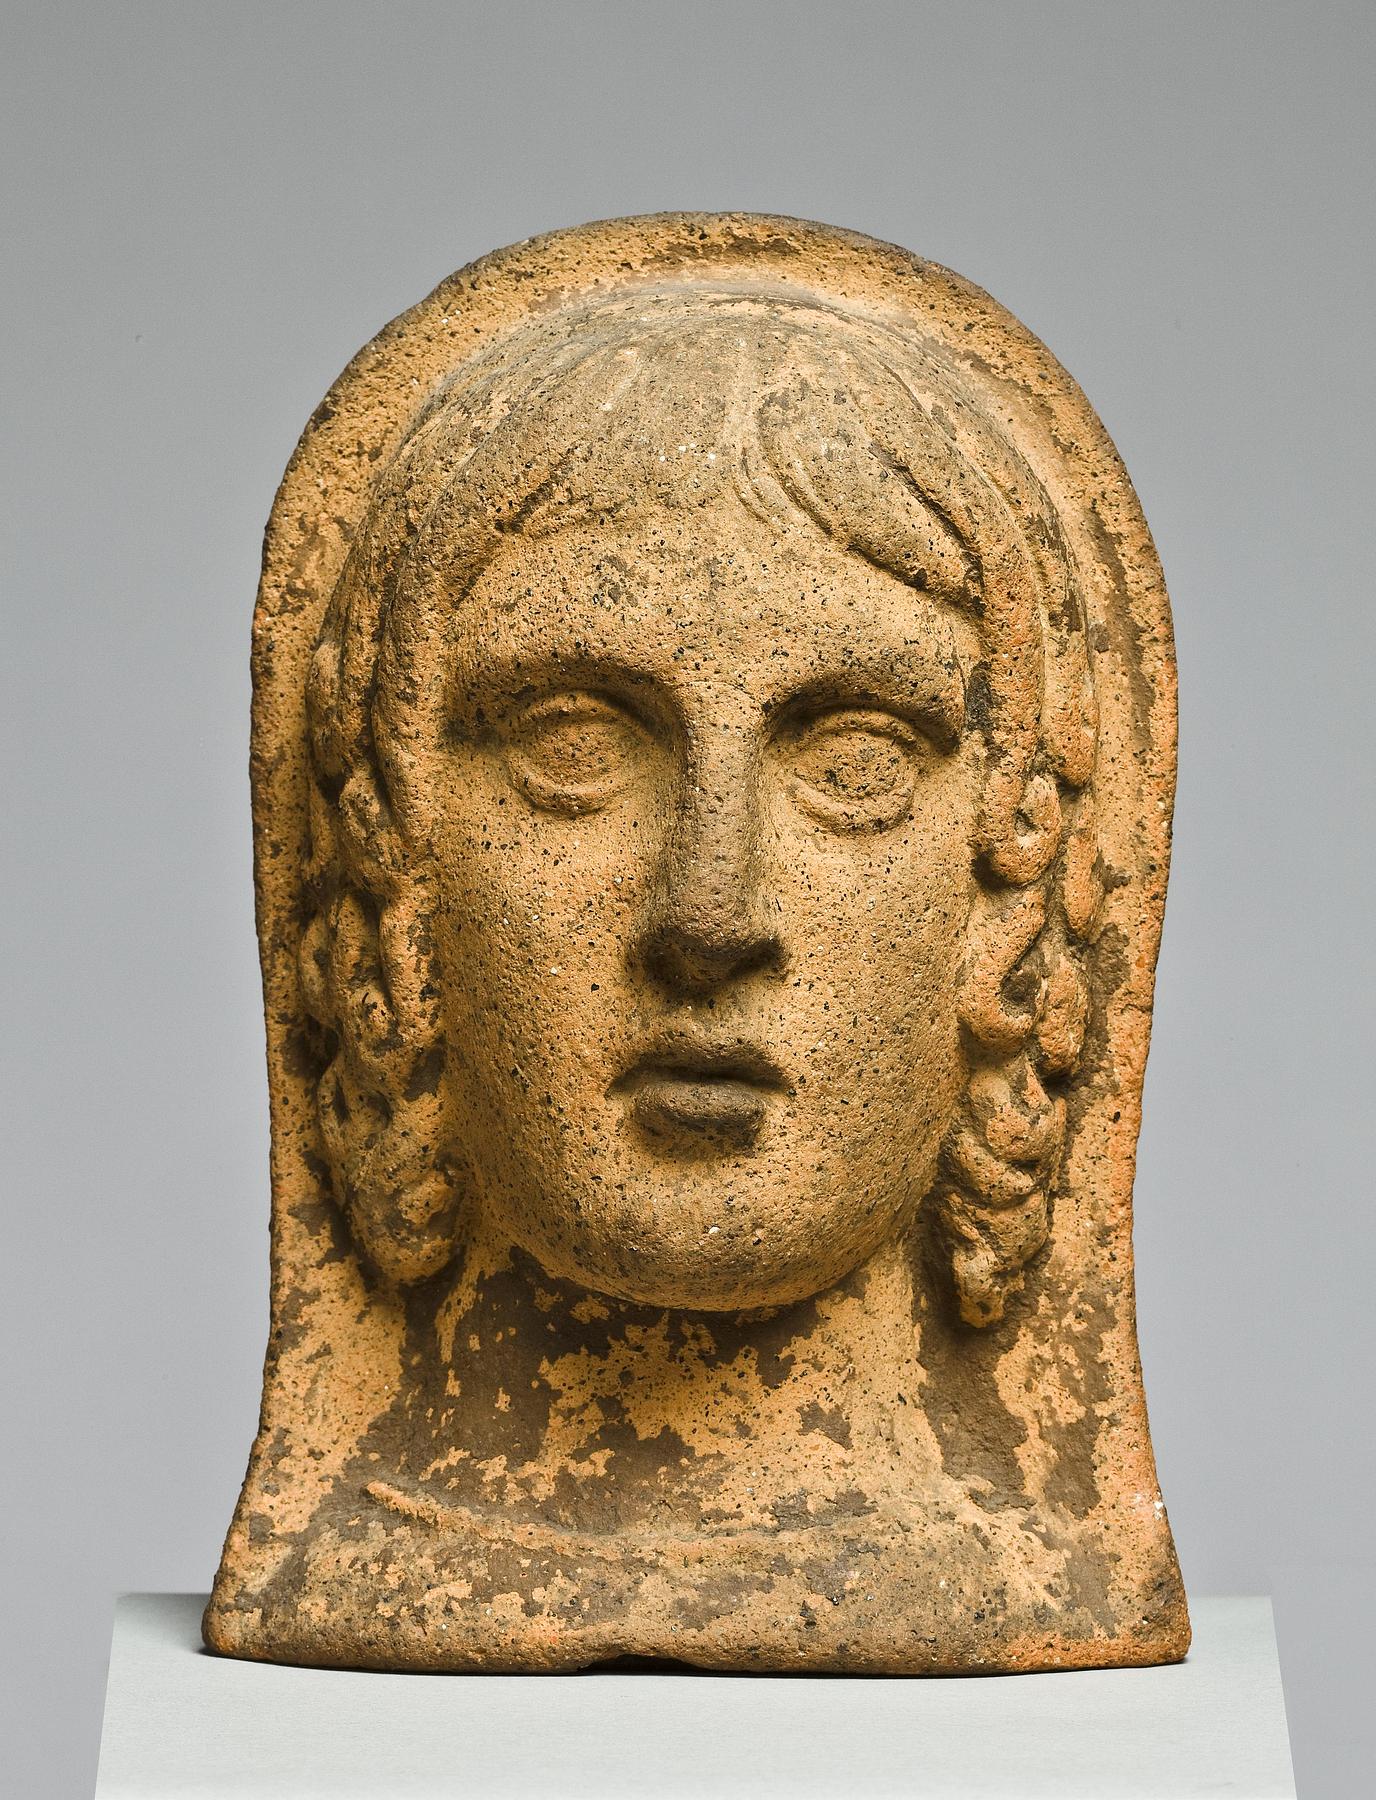 Votive head of a woman, H1006